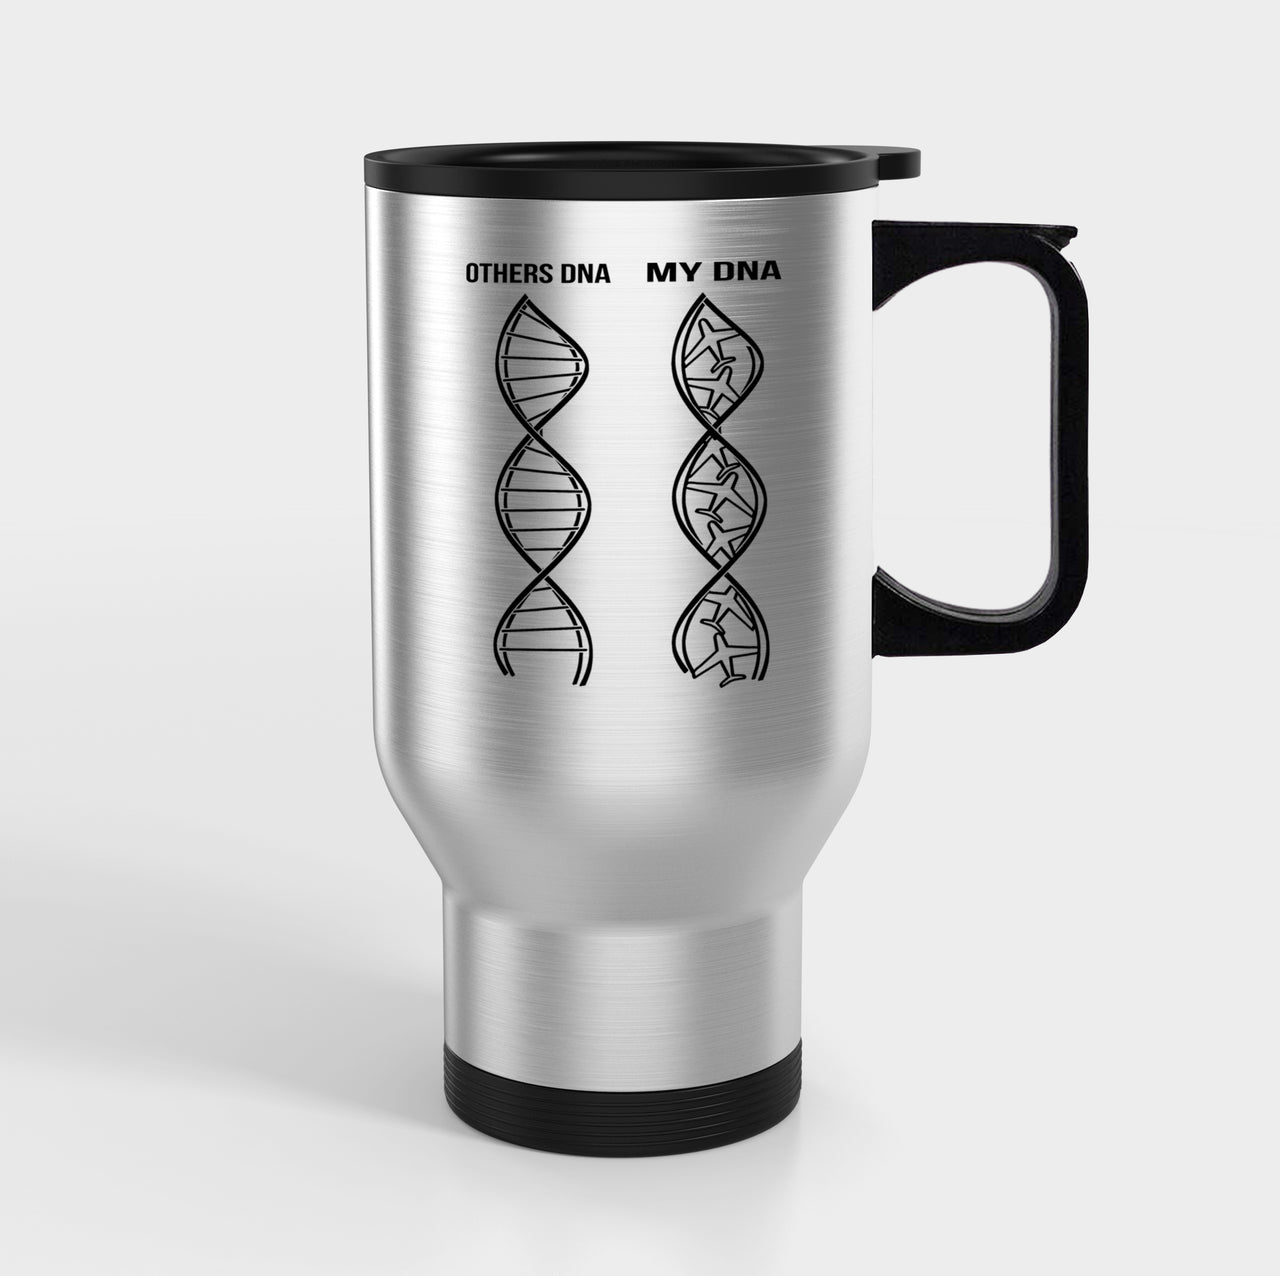 Aviation DNA Designed Travel Mugs (With Holder)